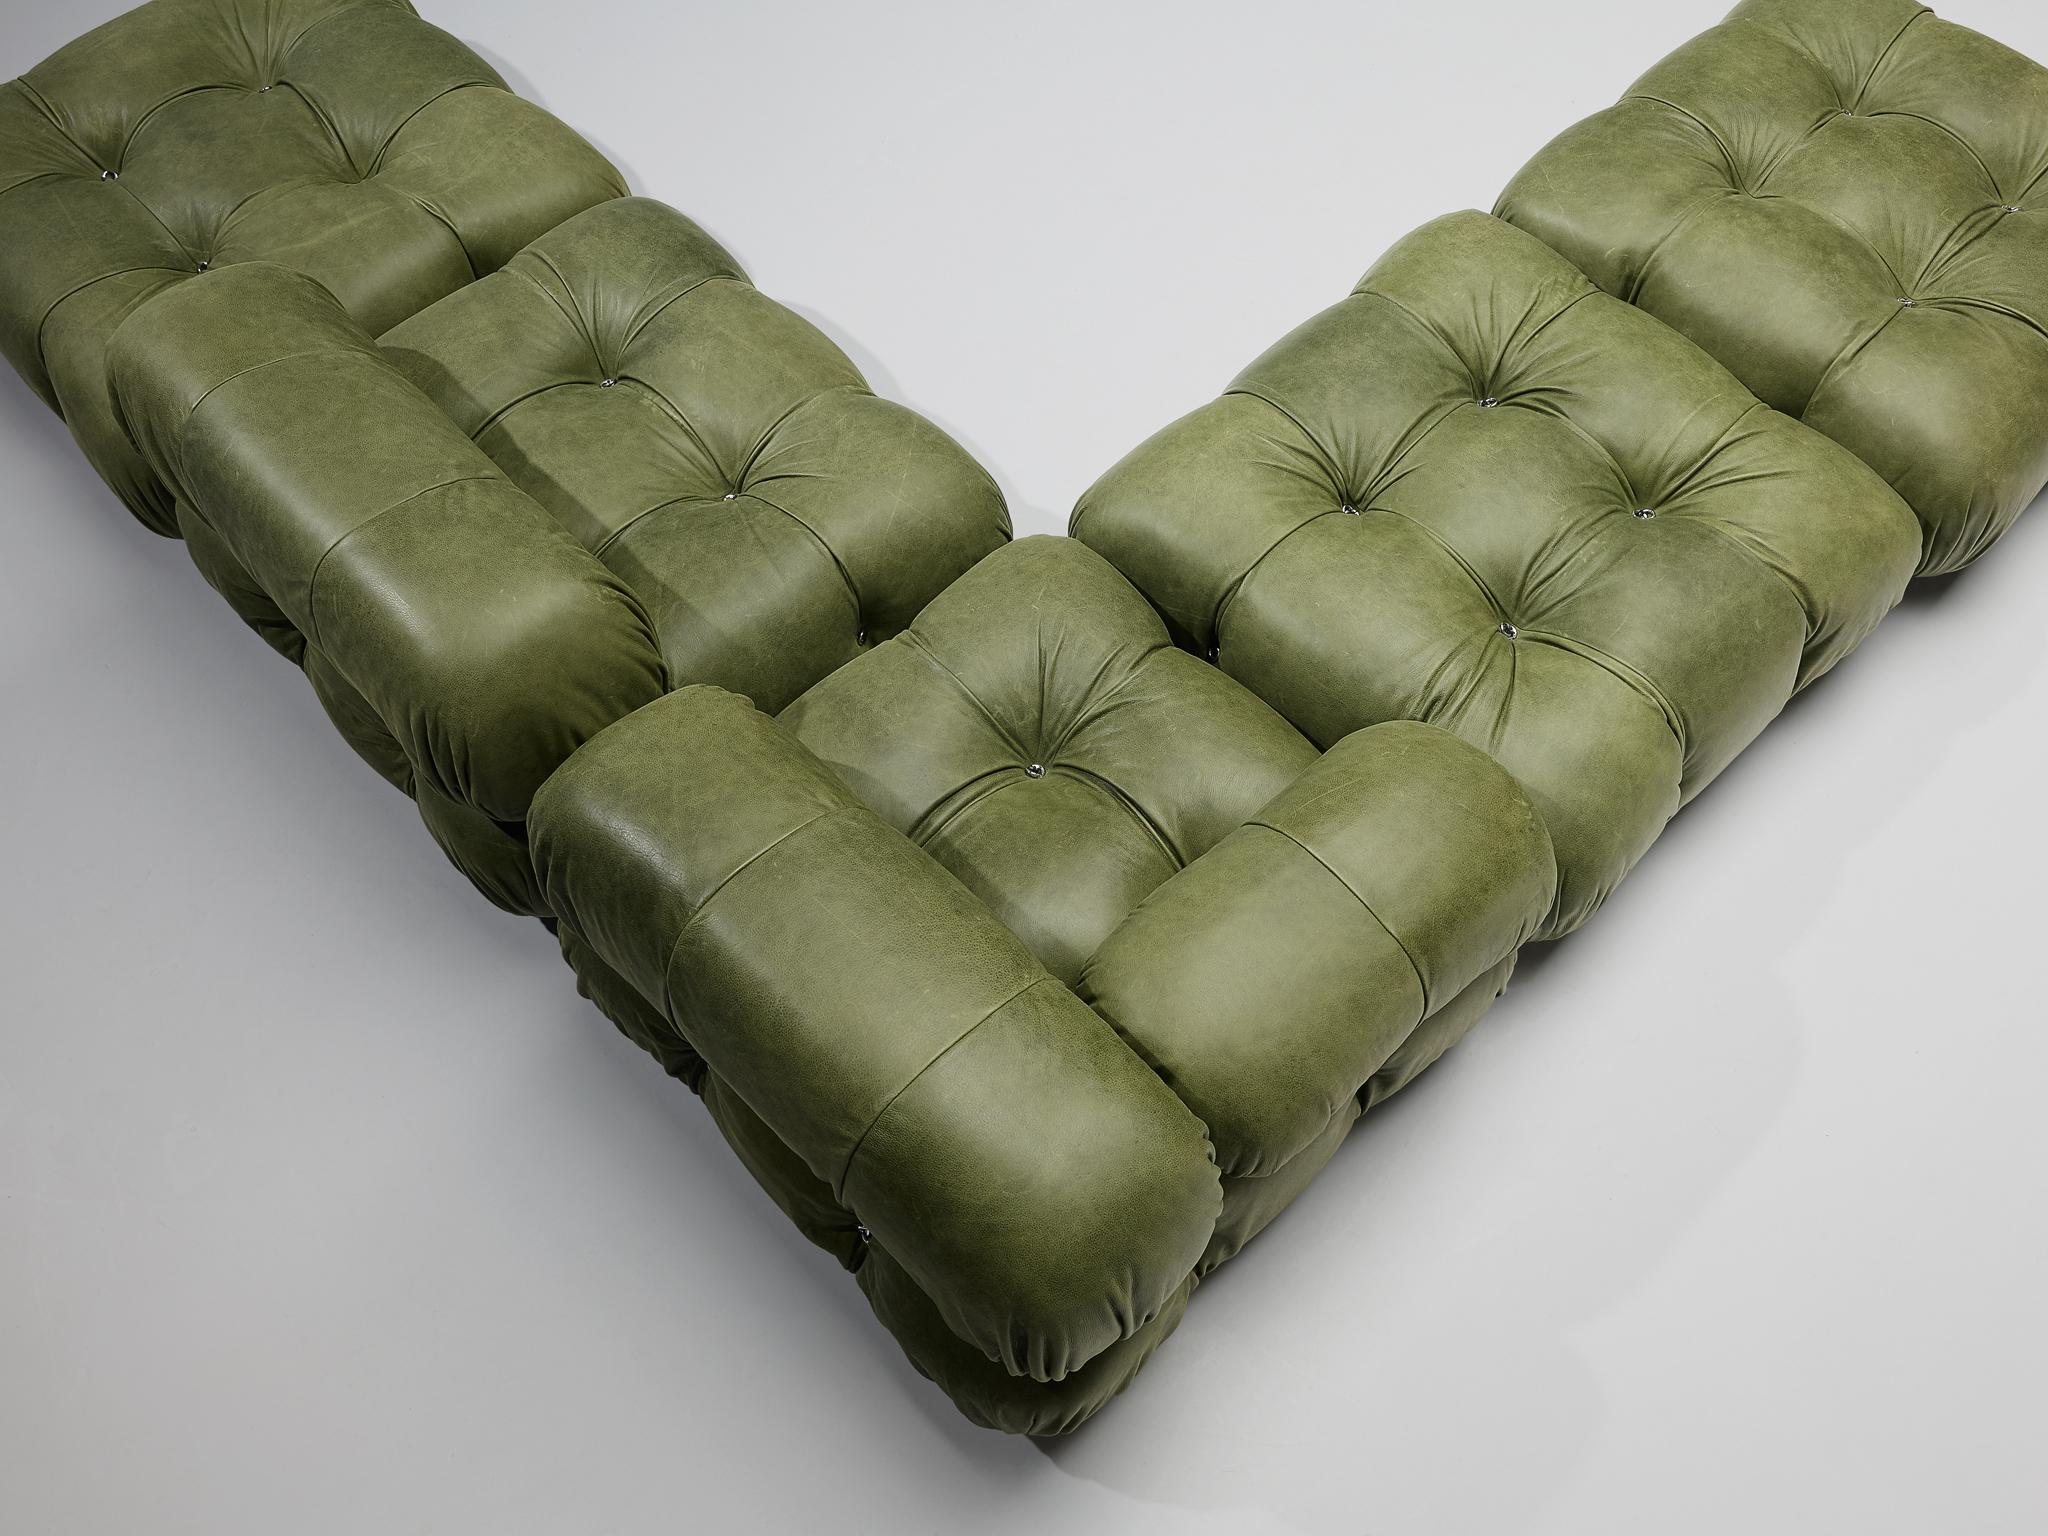 Late 20th Century Mario Bellini 'Camaleonda' Sectional Sofa in Green Leather